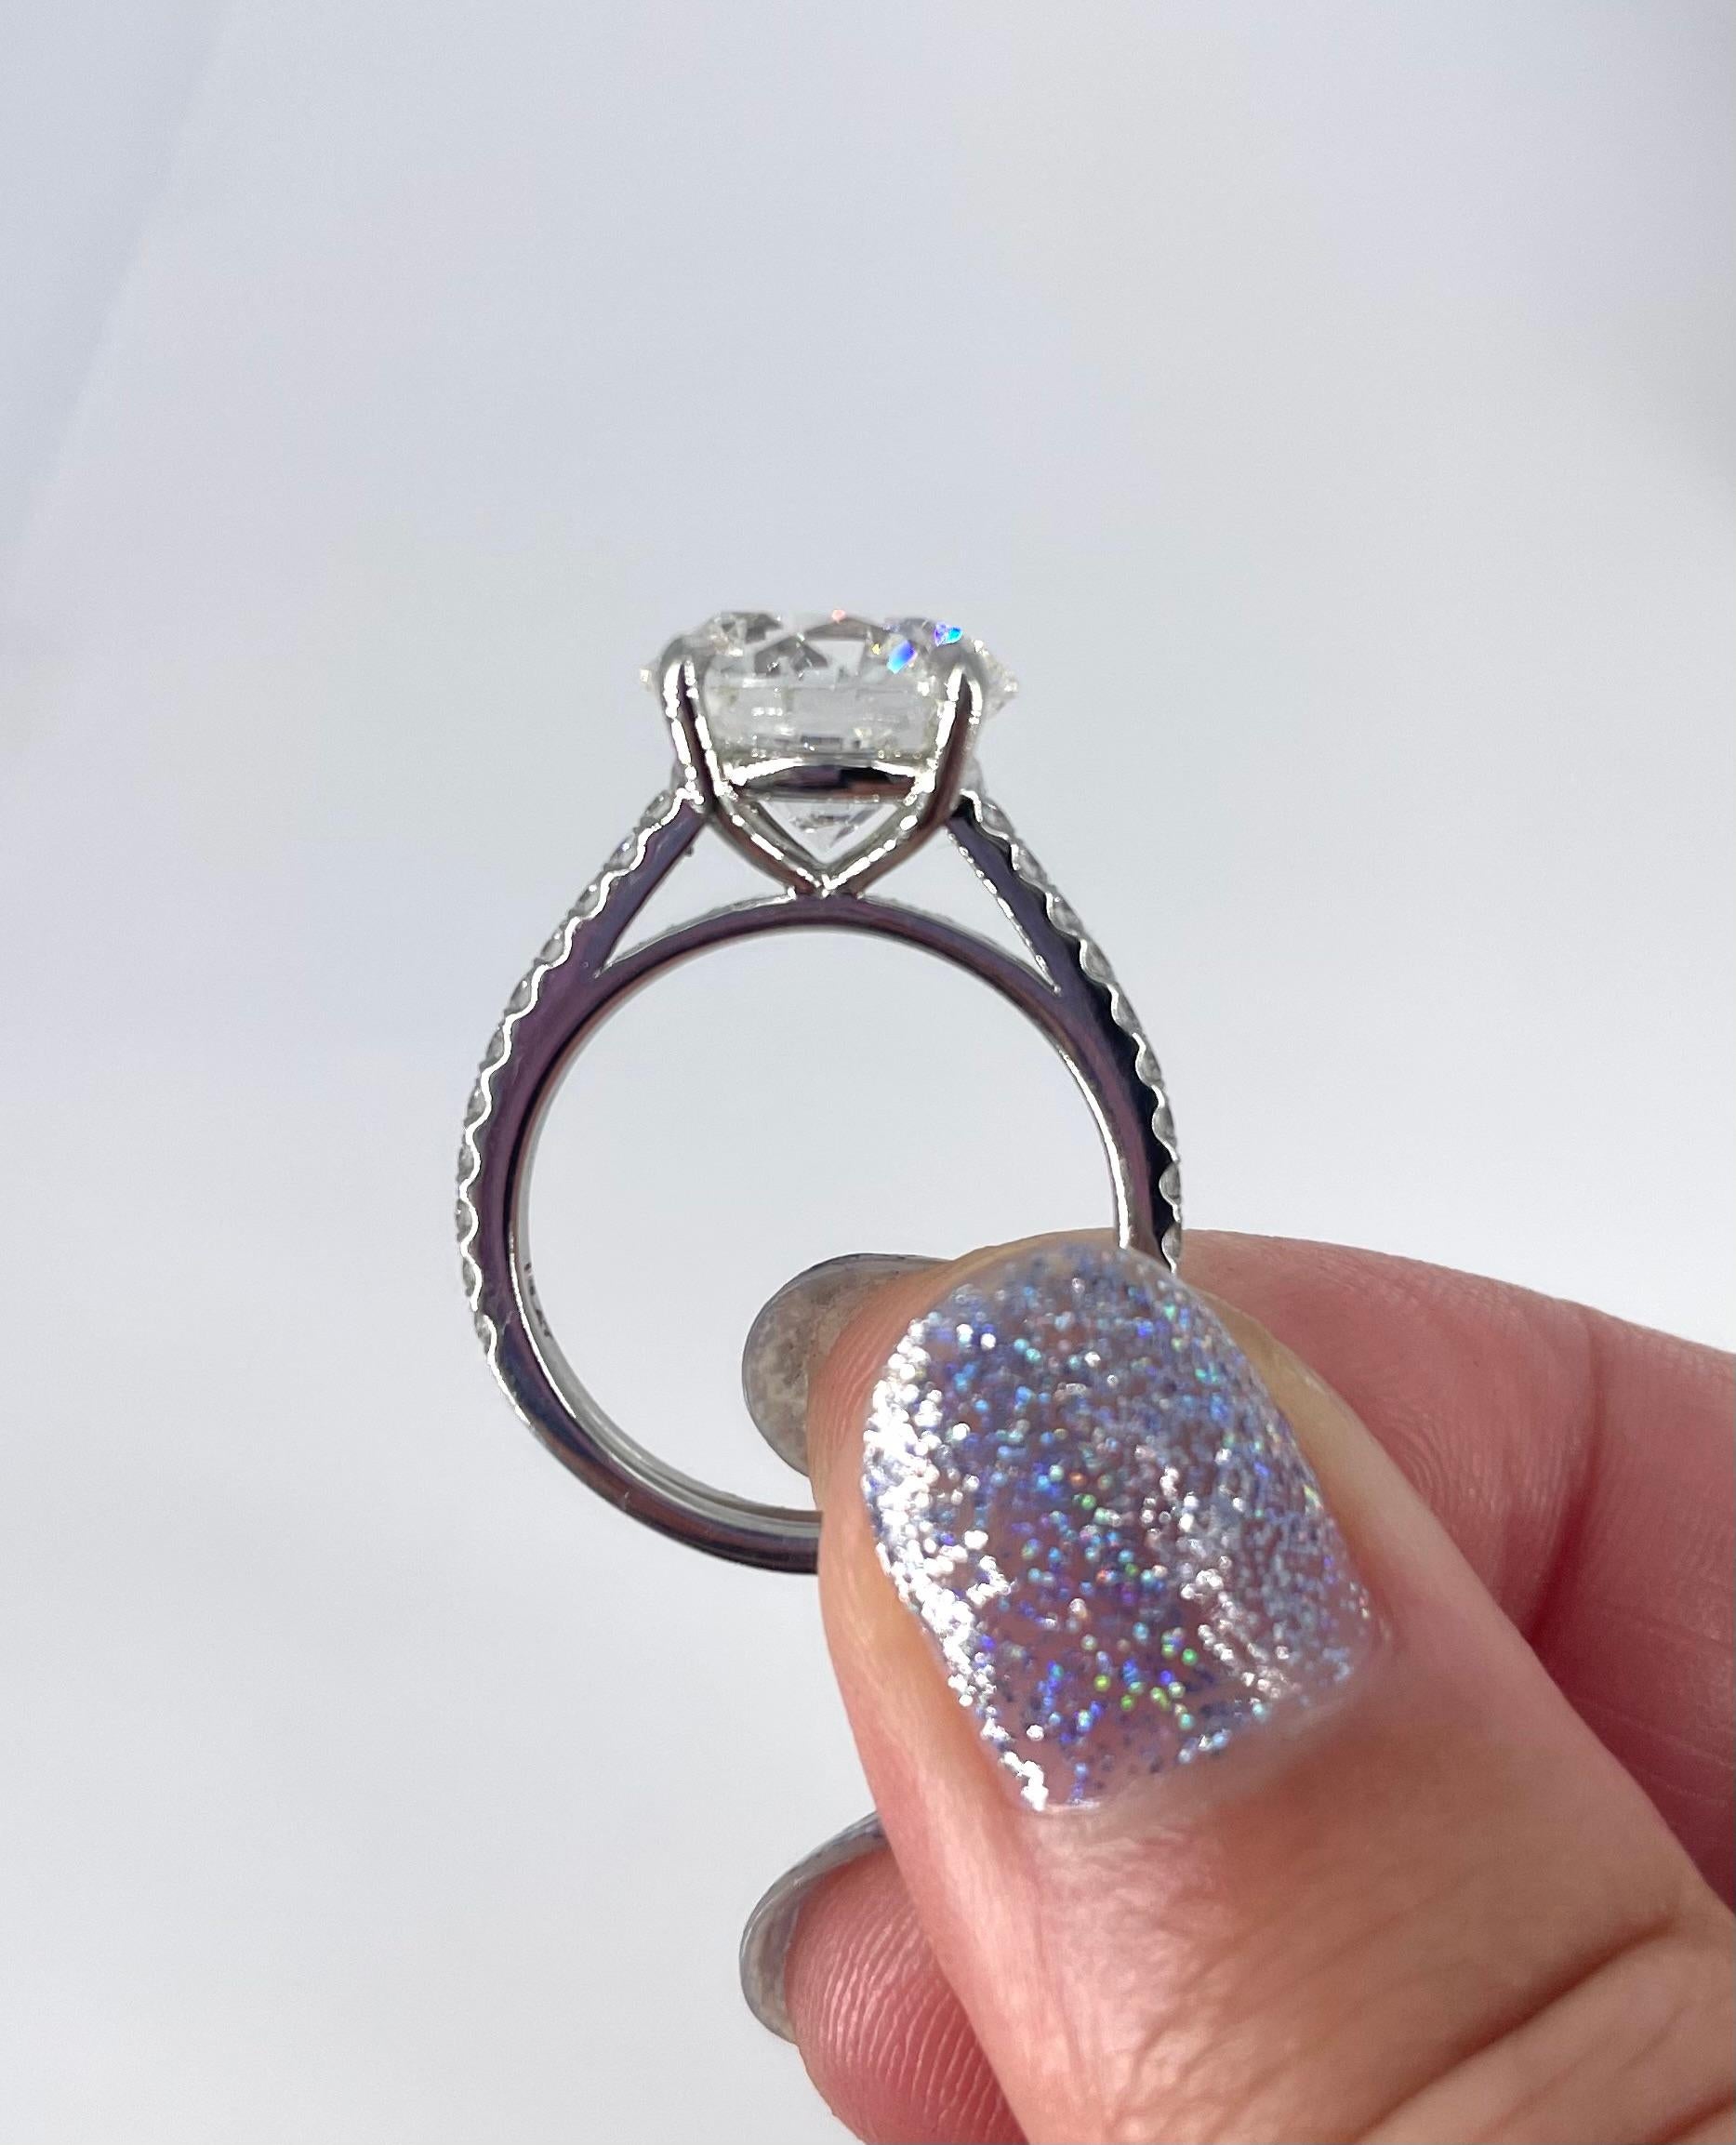 4.5 carat diamond ring